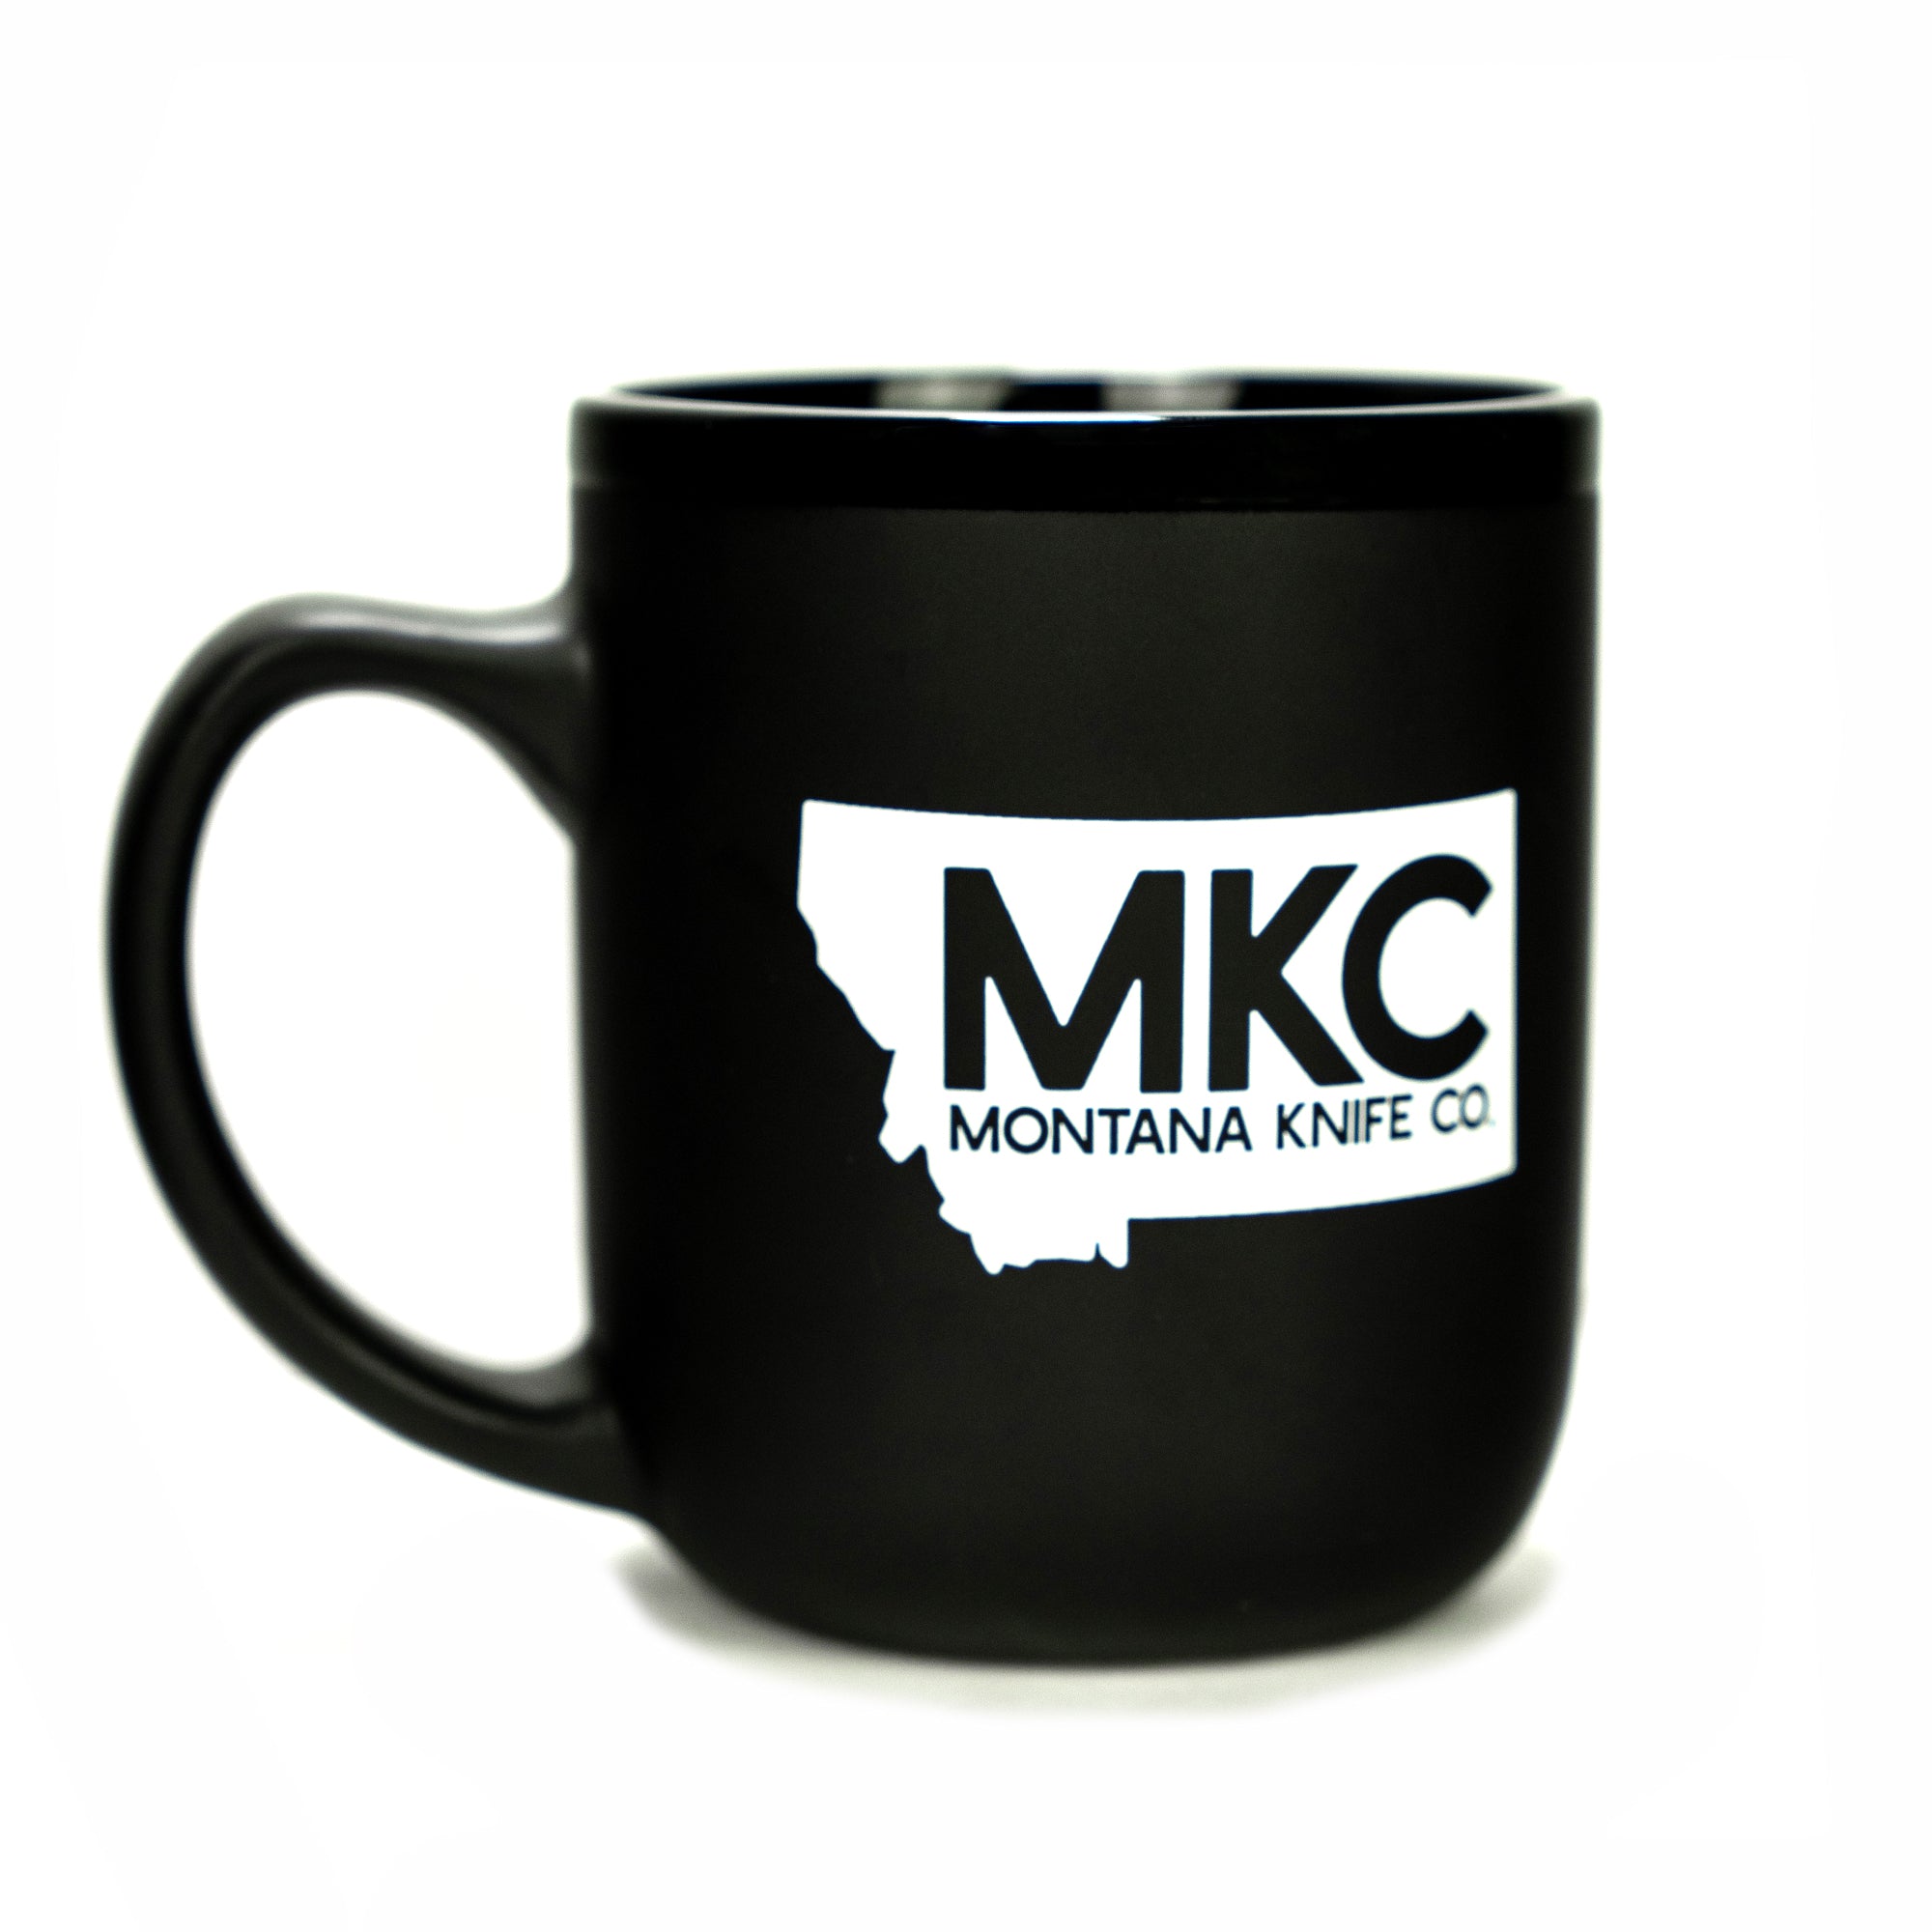 MKC CERAMIC COFFEE MUG